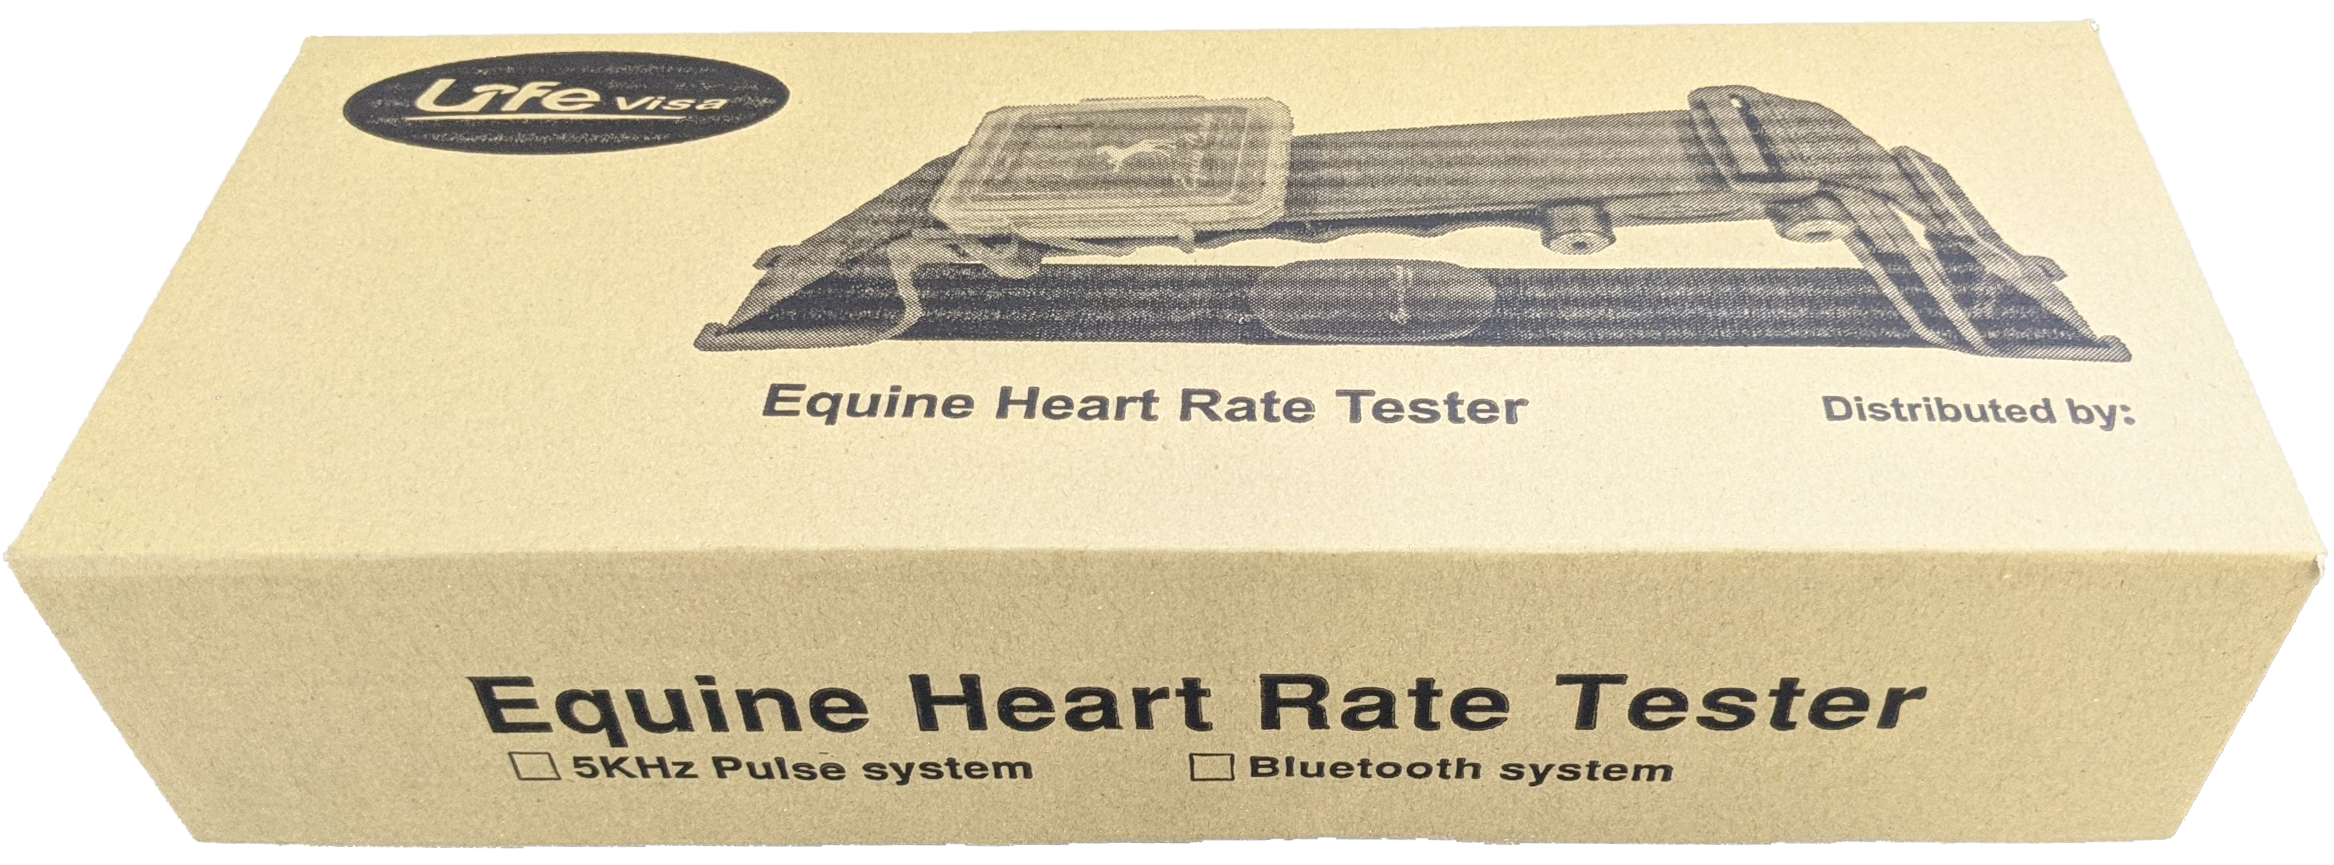 Lifevisa,lifevisa,Taiwan Biotronic,5.3KHz心率帶,gpulse heart rate monitor,5Khz heart rate,馬心率